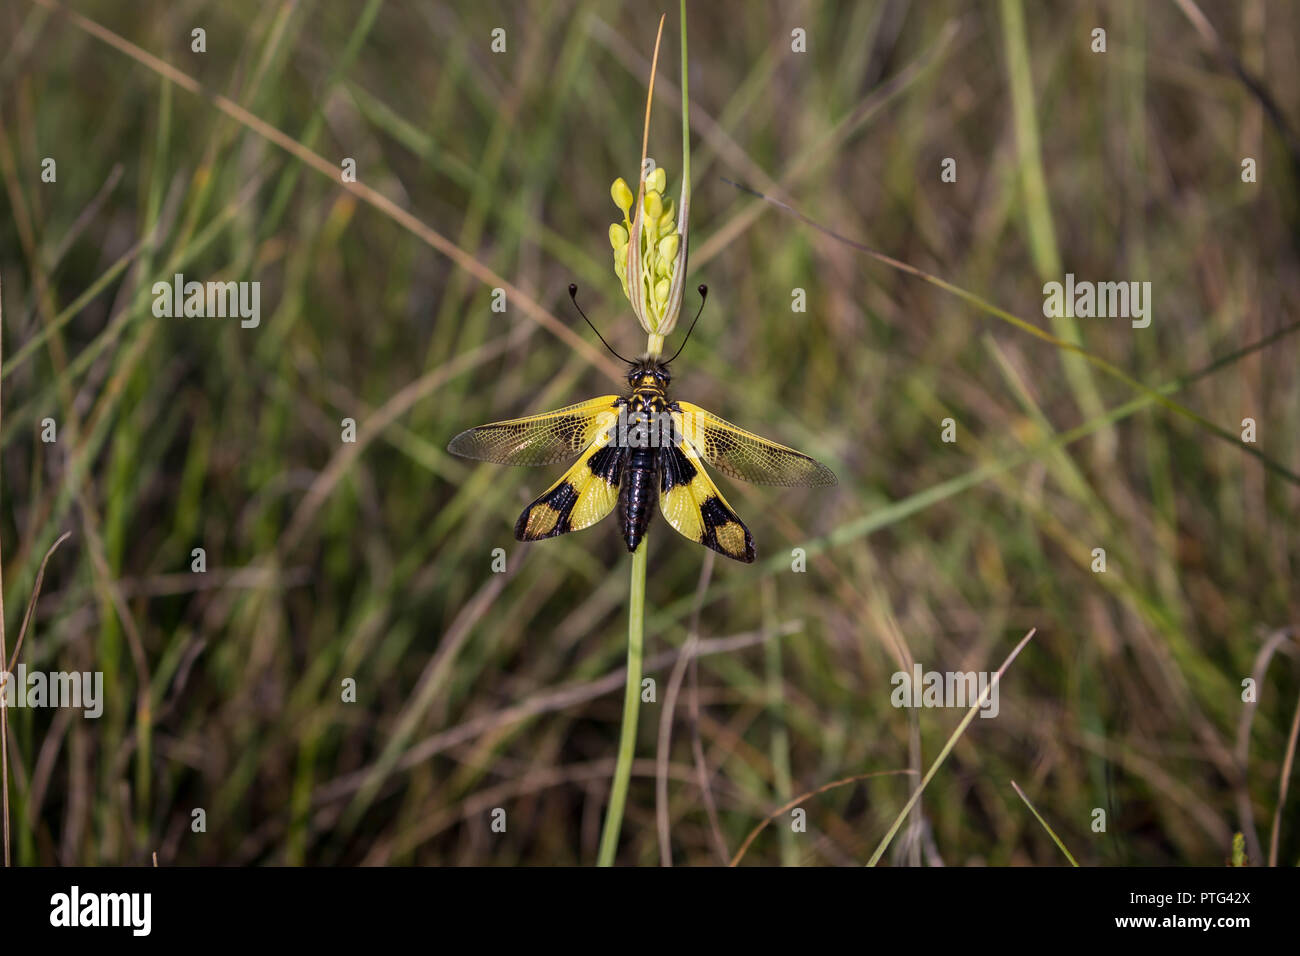 Single yellow black insect - Libelloides macaronius standing on the Allium flavum Stock Photo